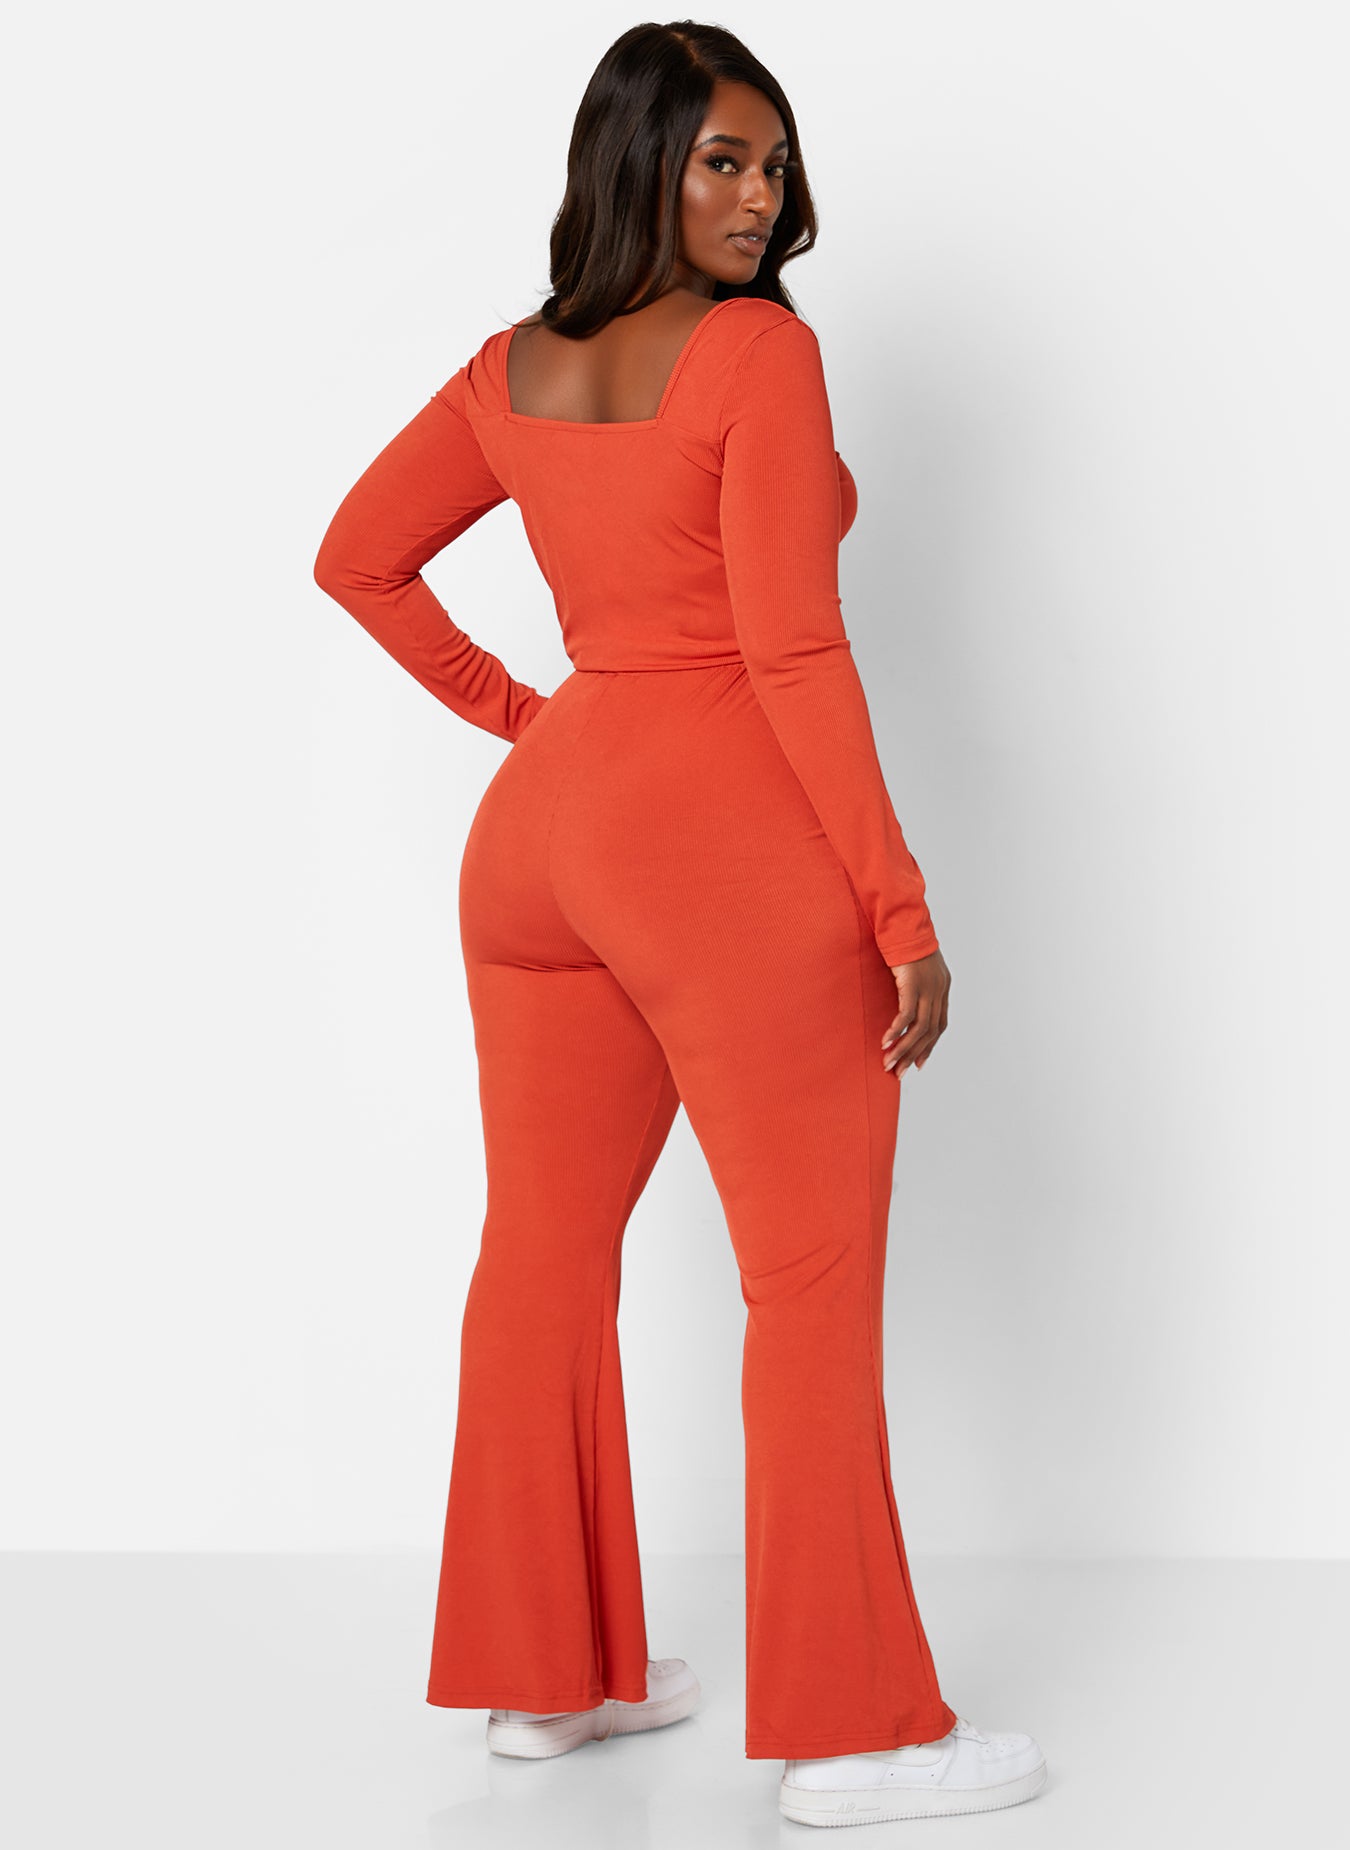 Orange The Prize Adjustable Ruched Crop Top & Bell Bottom Pants Set Plus Sizes